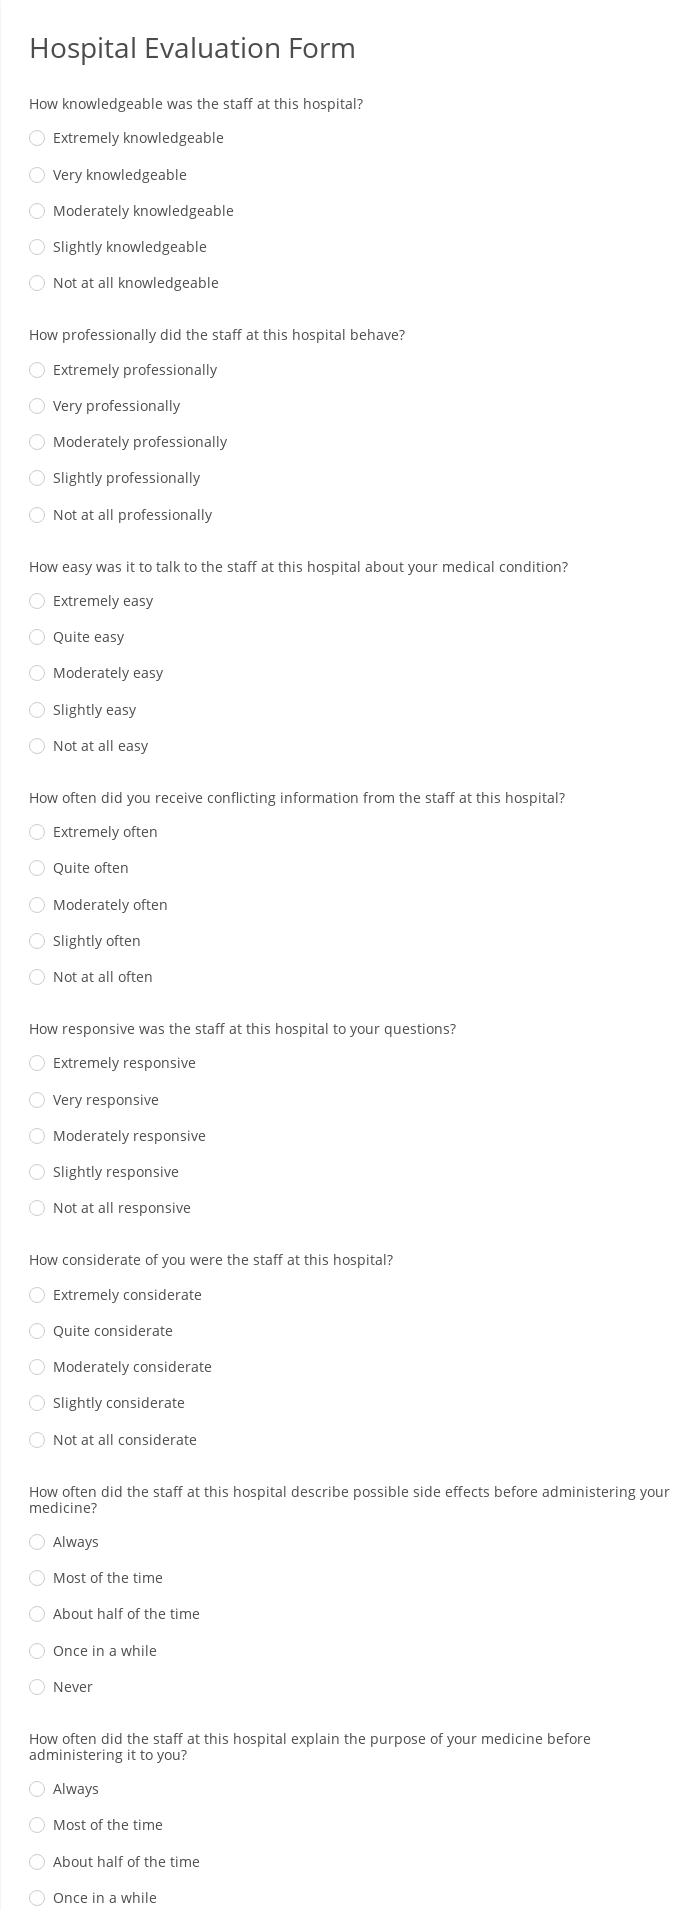 Hospital Evaluation Form